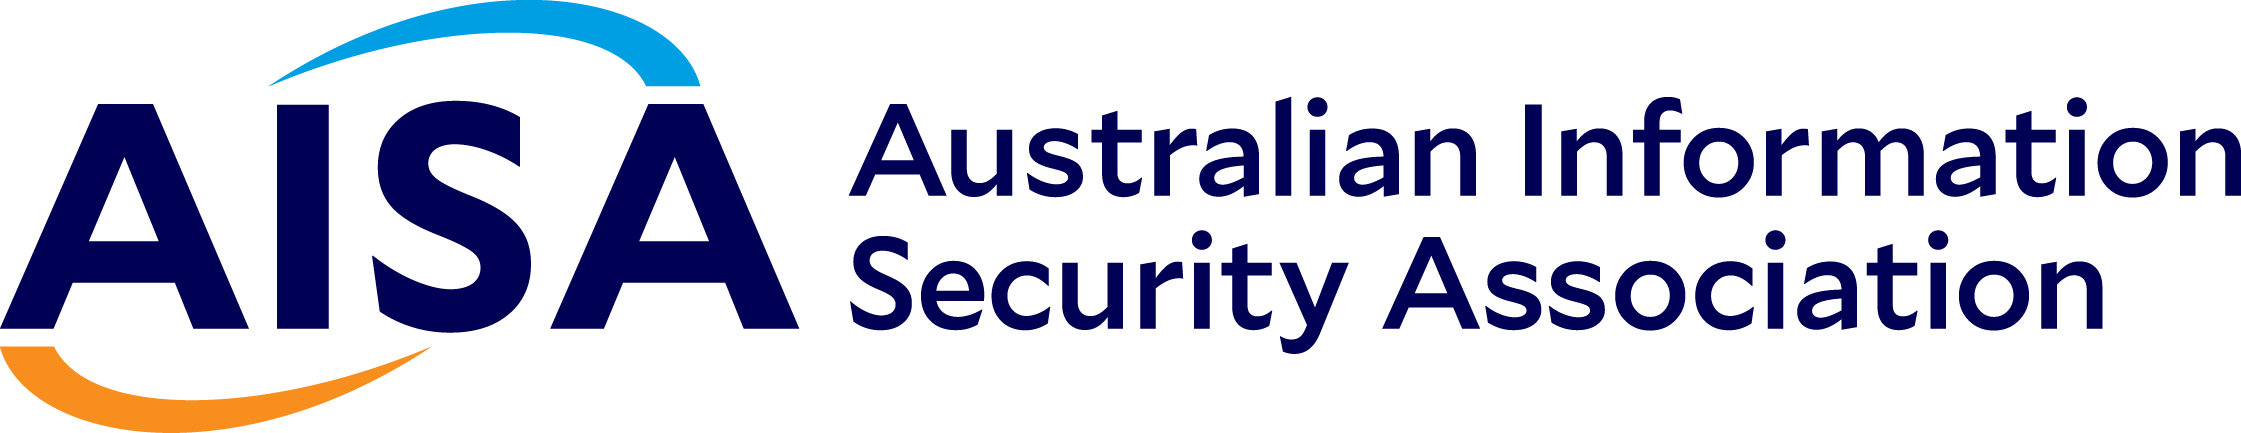 Logo der Australian Information Security Association (AISA)